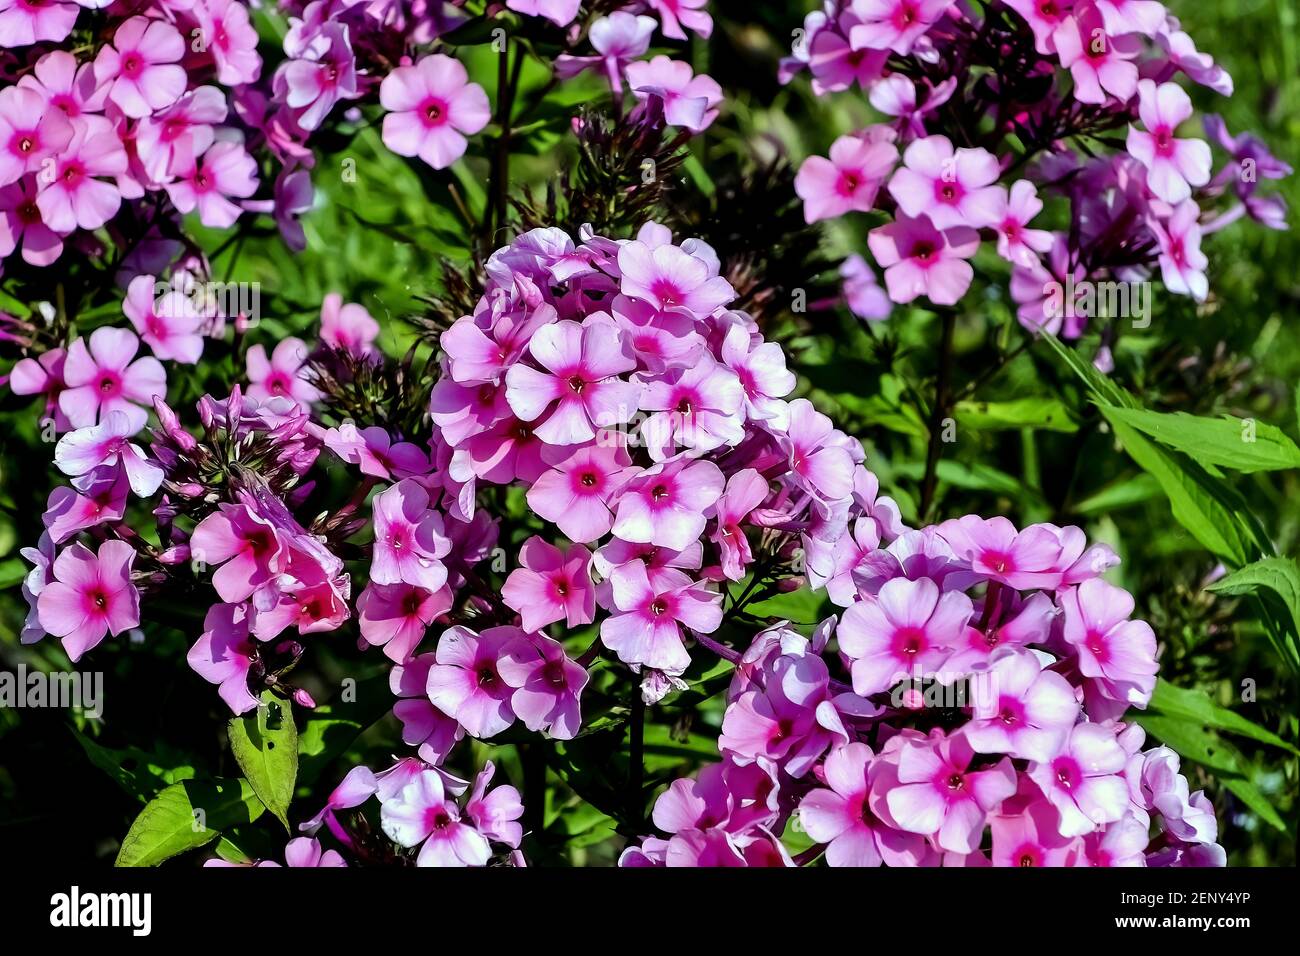 Flowers of the garden phlox - Phlox paniculata - in summer, Germany, Europe Stock Photo